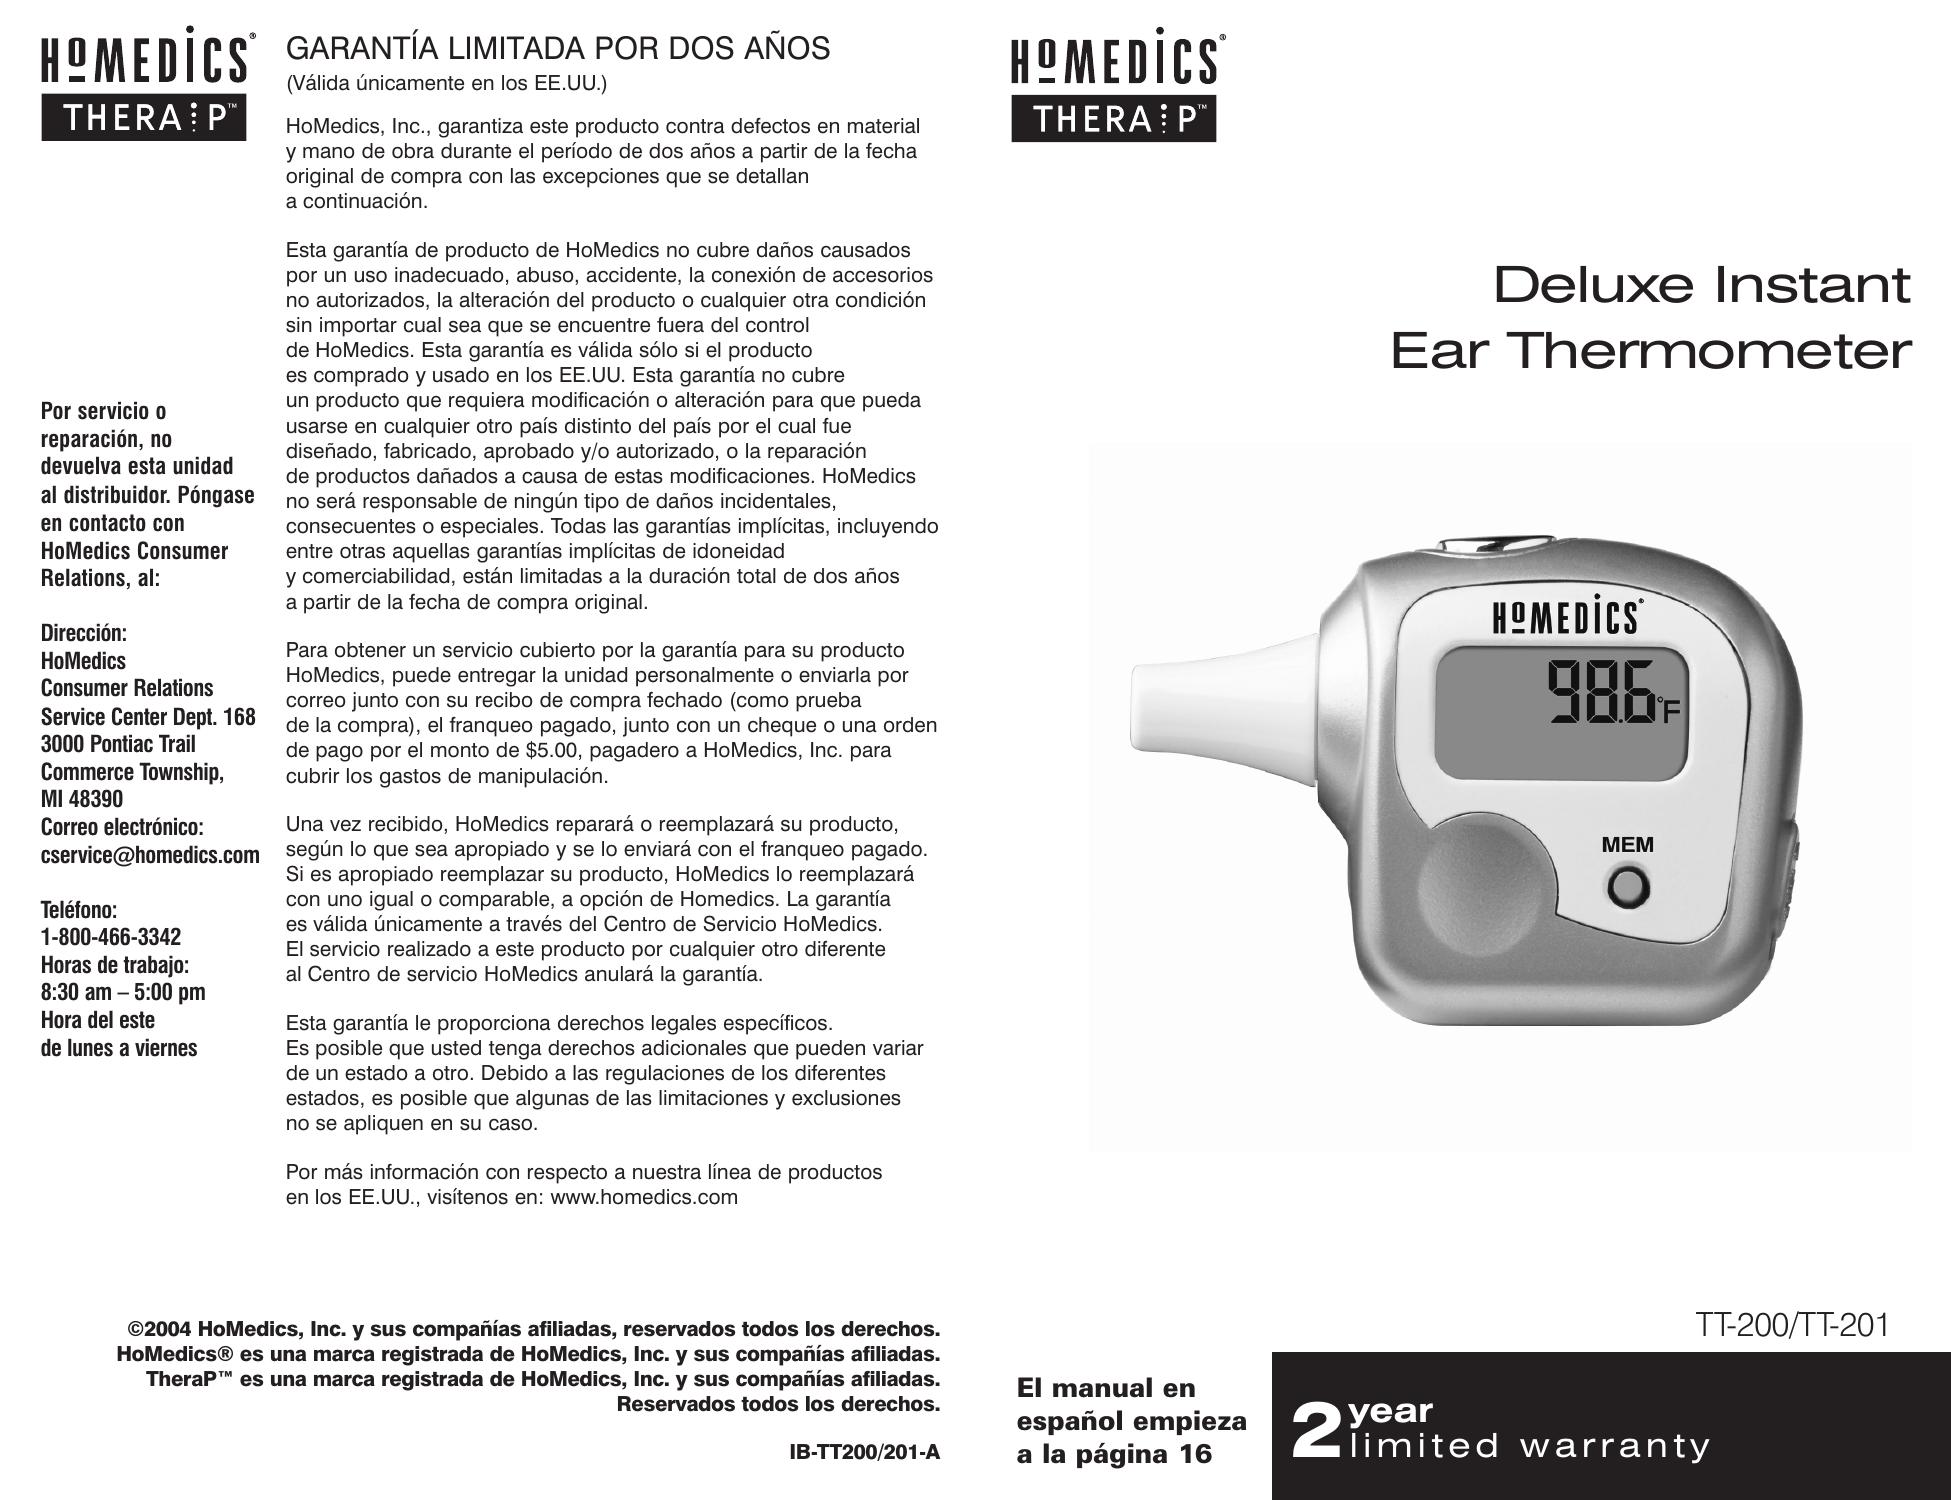 HoMedics TT-201 Thermometer User Manual